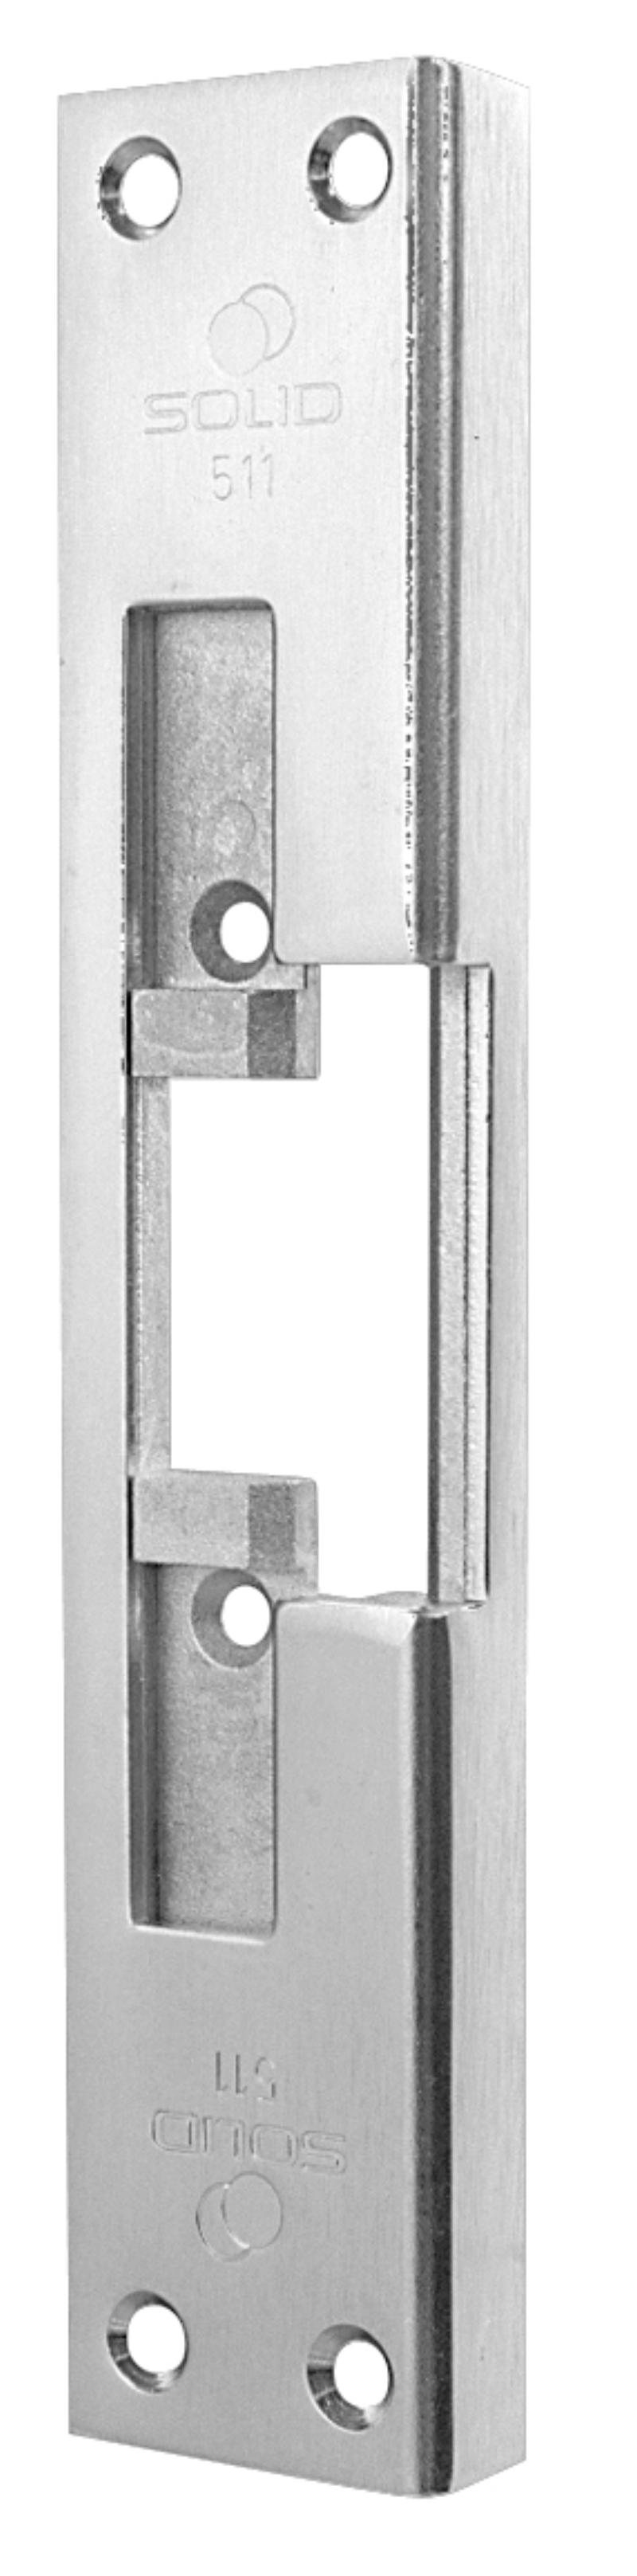 Solid stolpe 511T t/el-slutblik (975290)